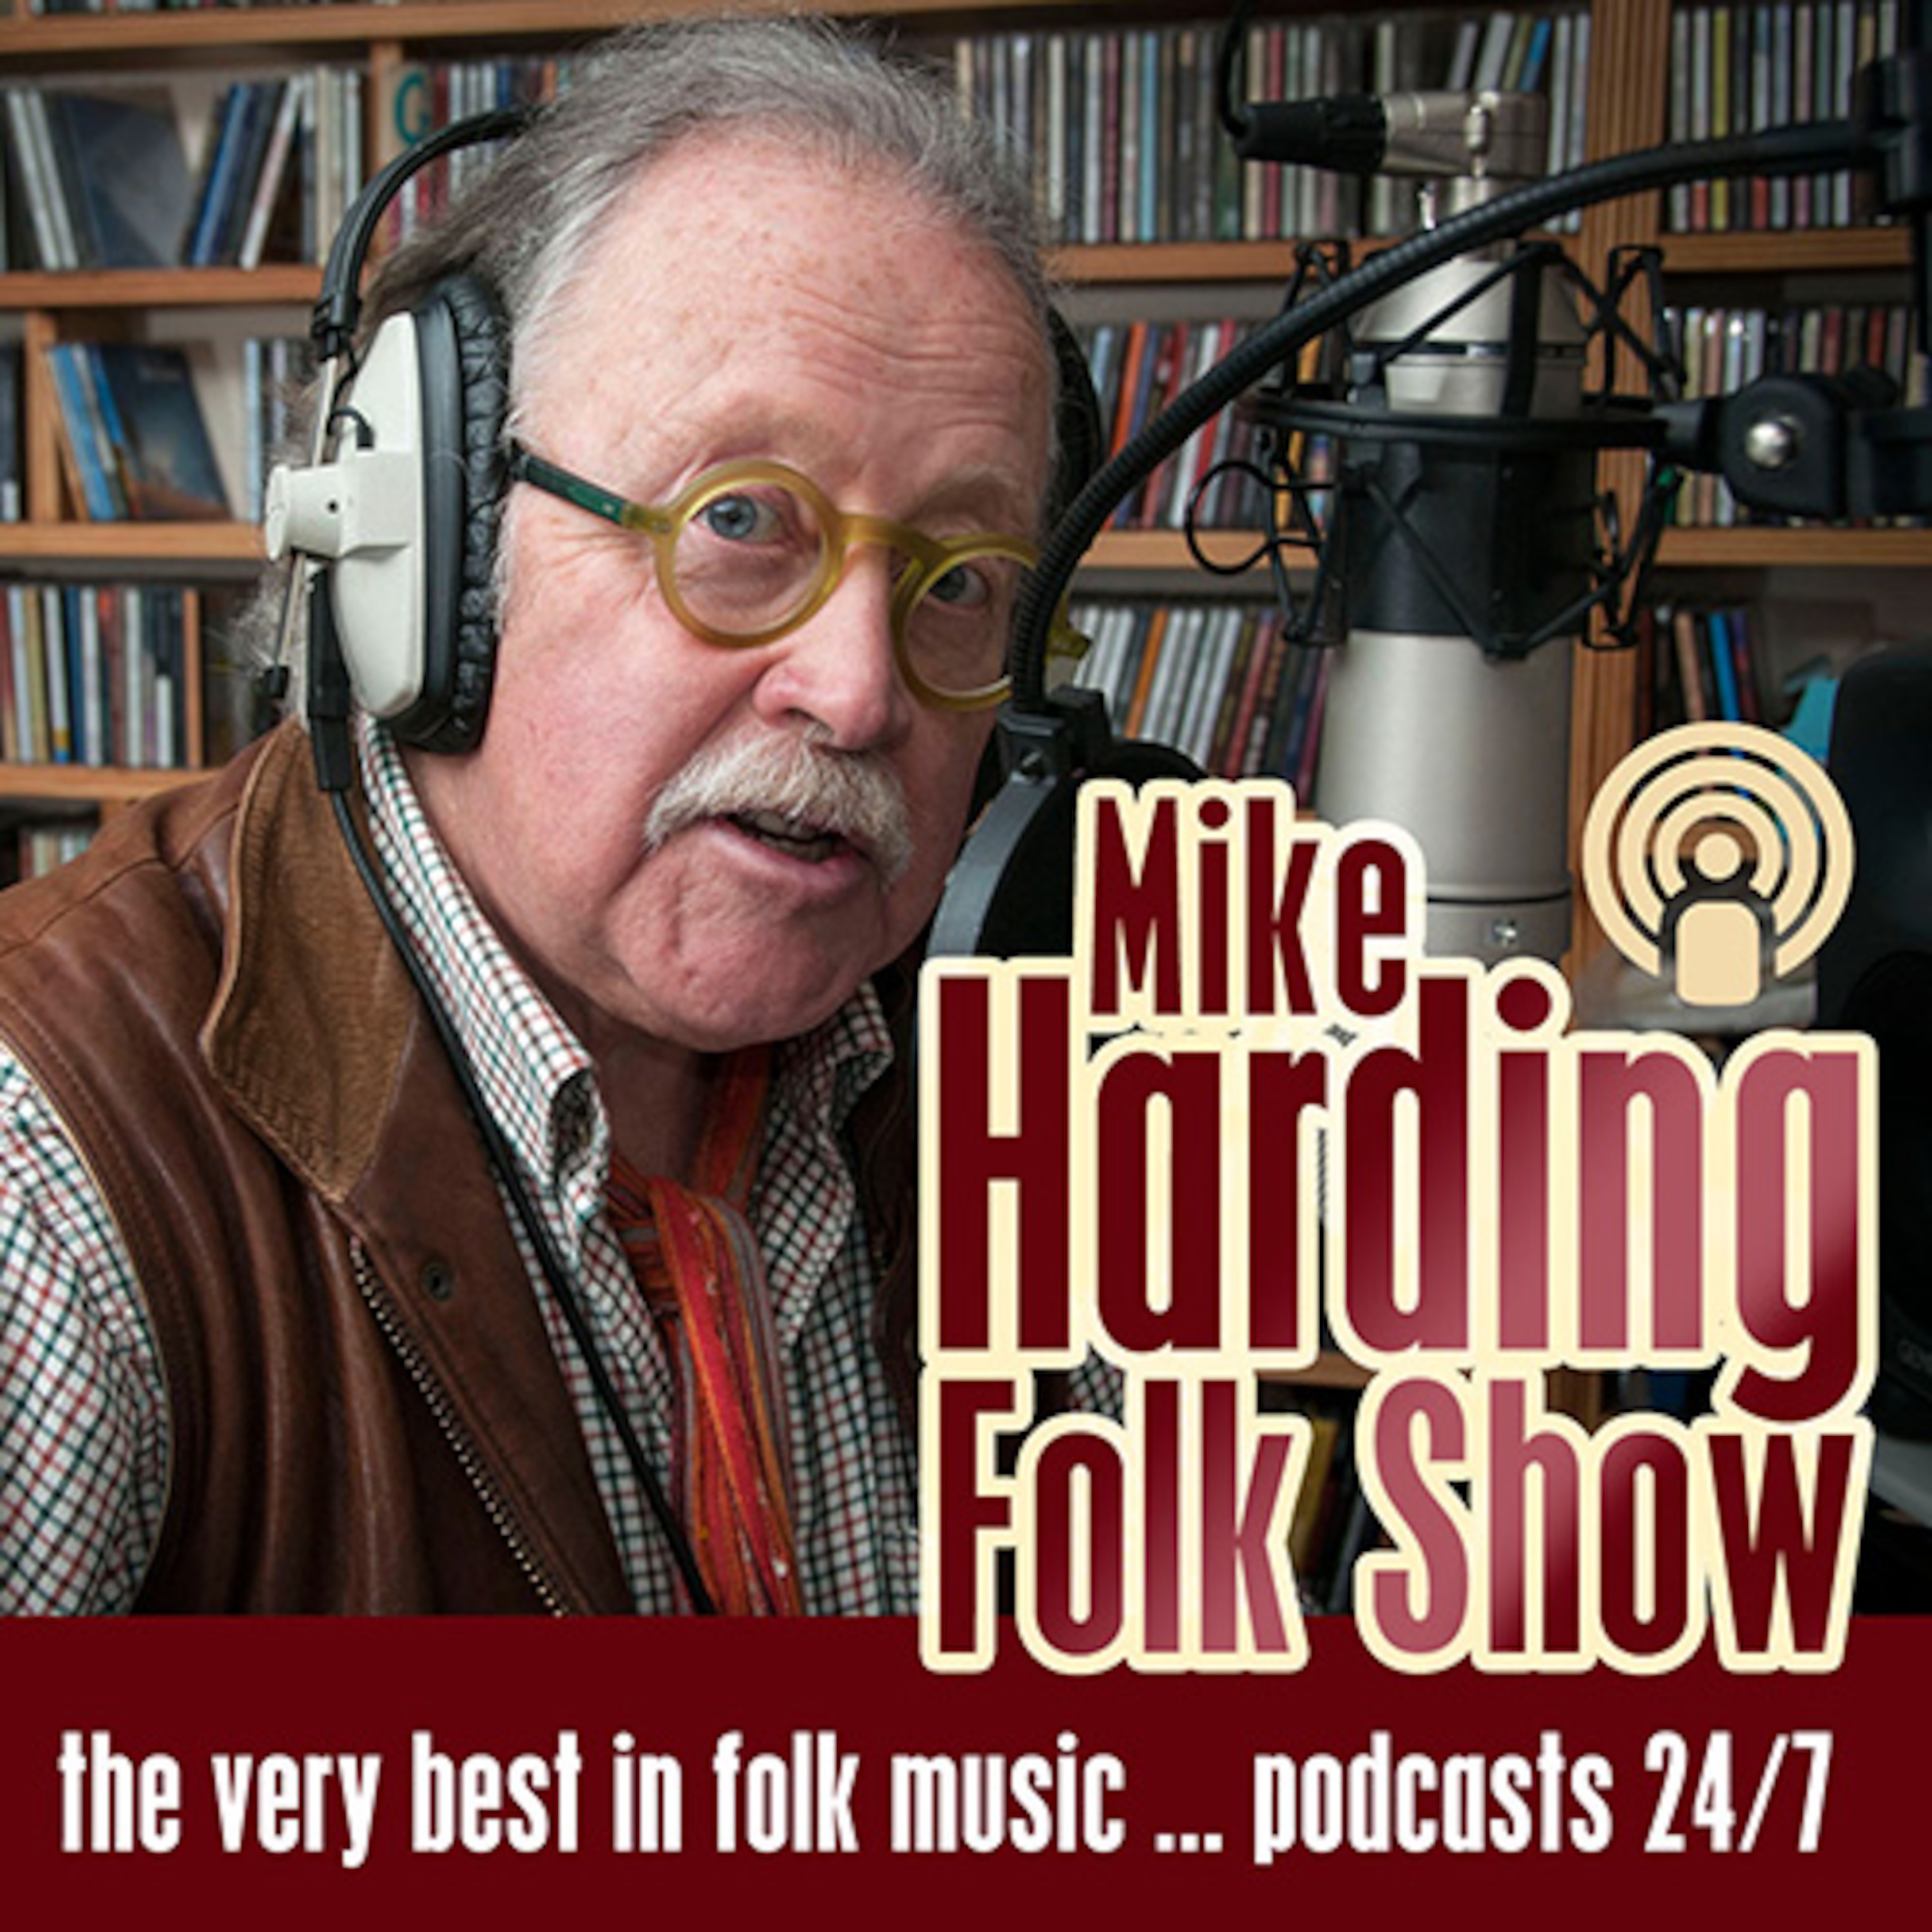 Mike Harding Folk Show 158